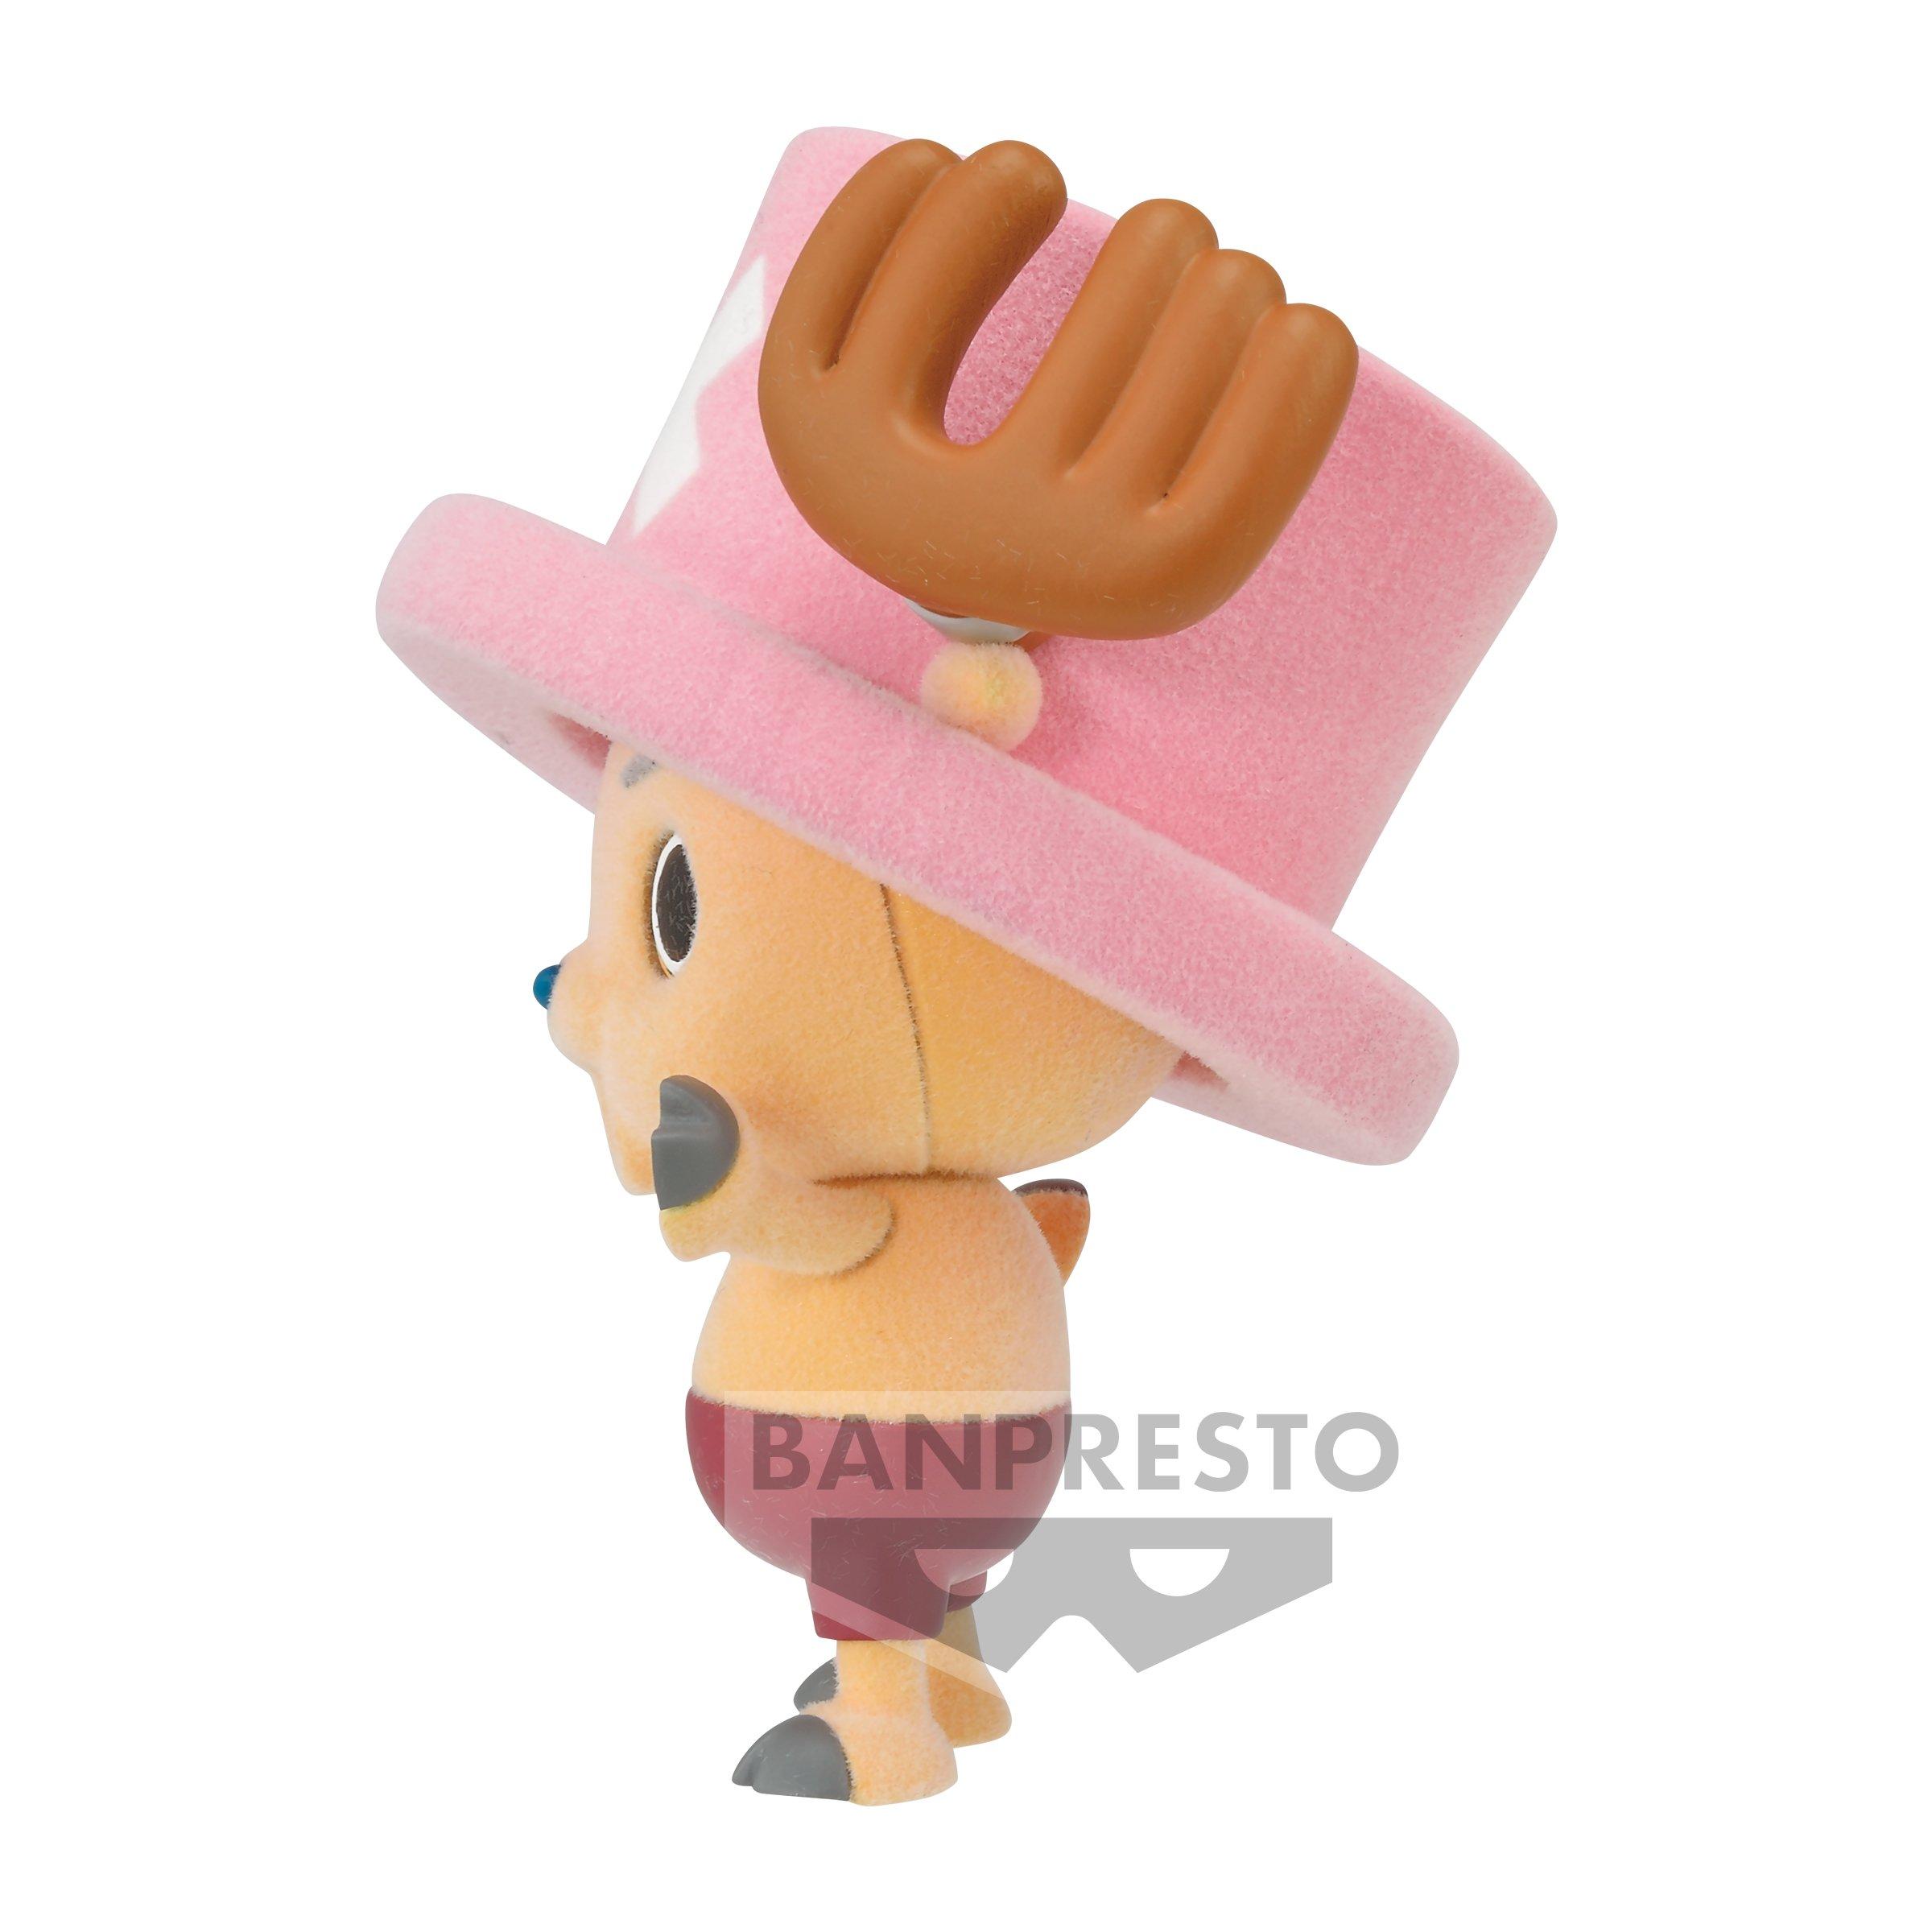 Banpresto  Statische Figur - Fluffy Puffy - One Piece - Tony Tony Chopper 